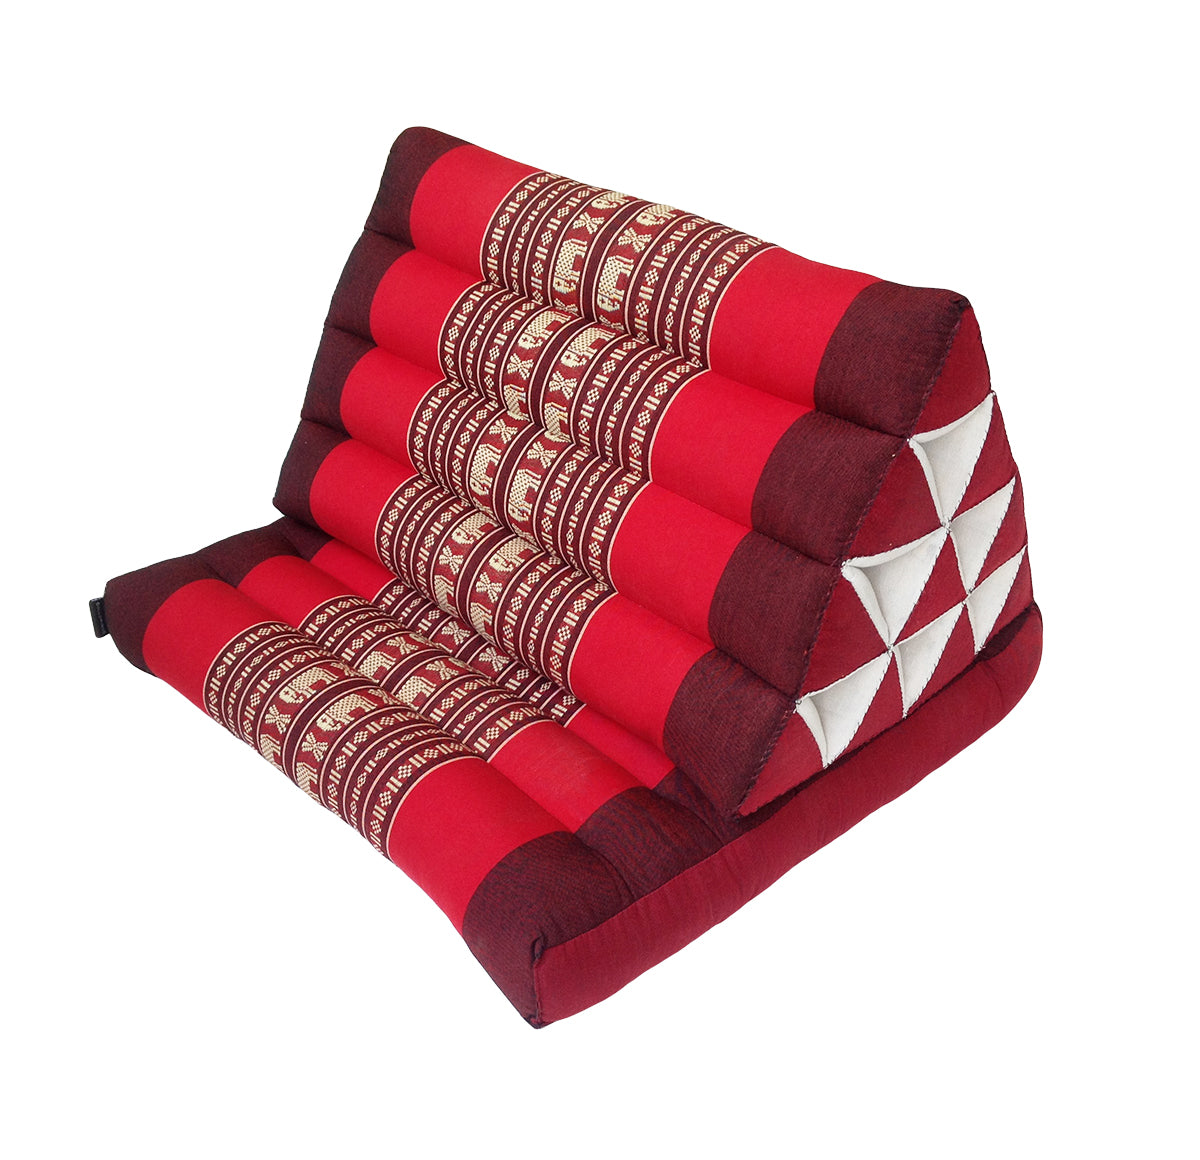 Thai Kapok 1 Fold Meditation Seat with Triangle Cushion ~ Red with Elephants